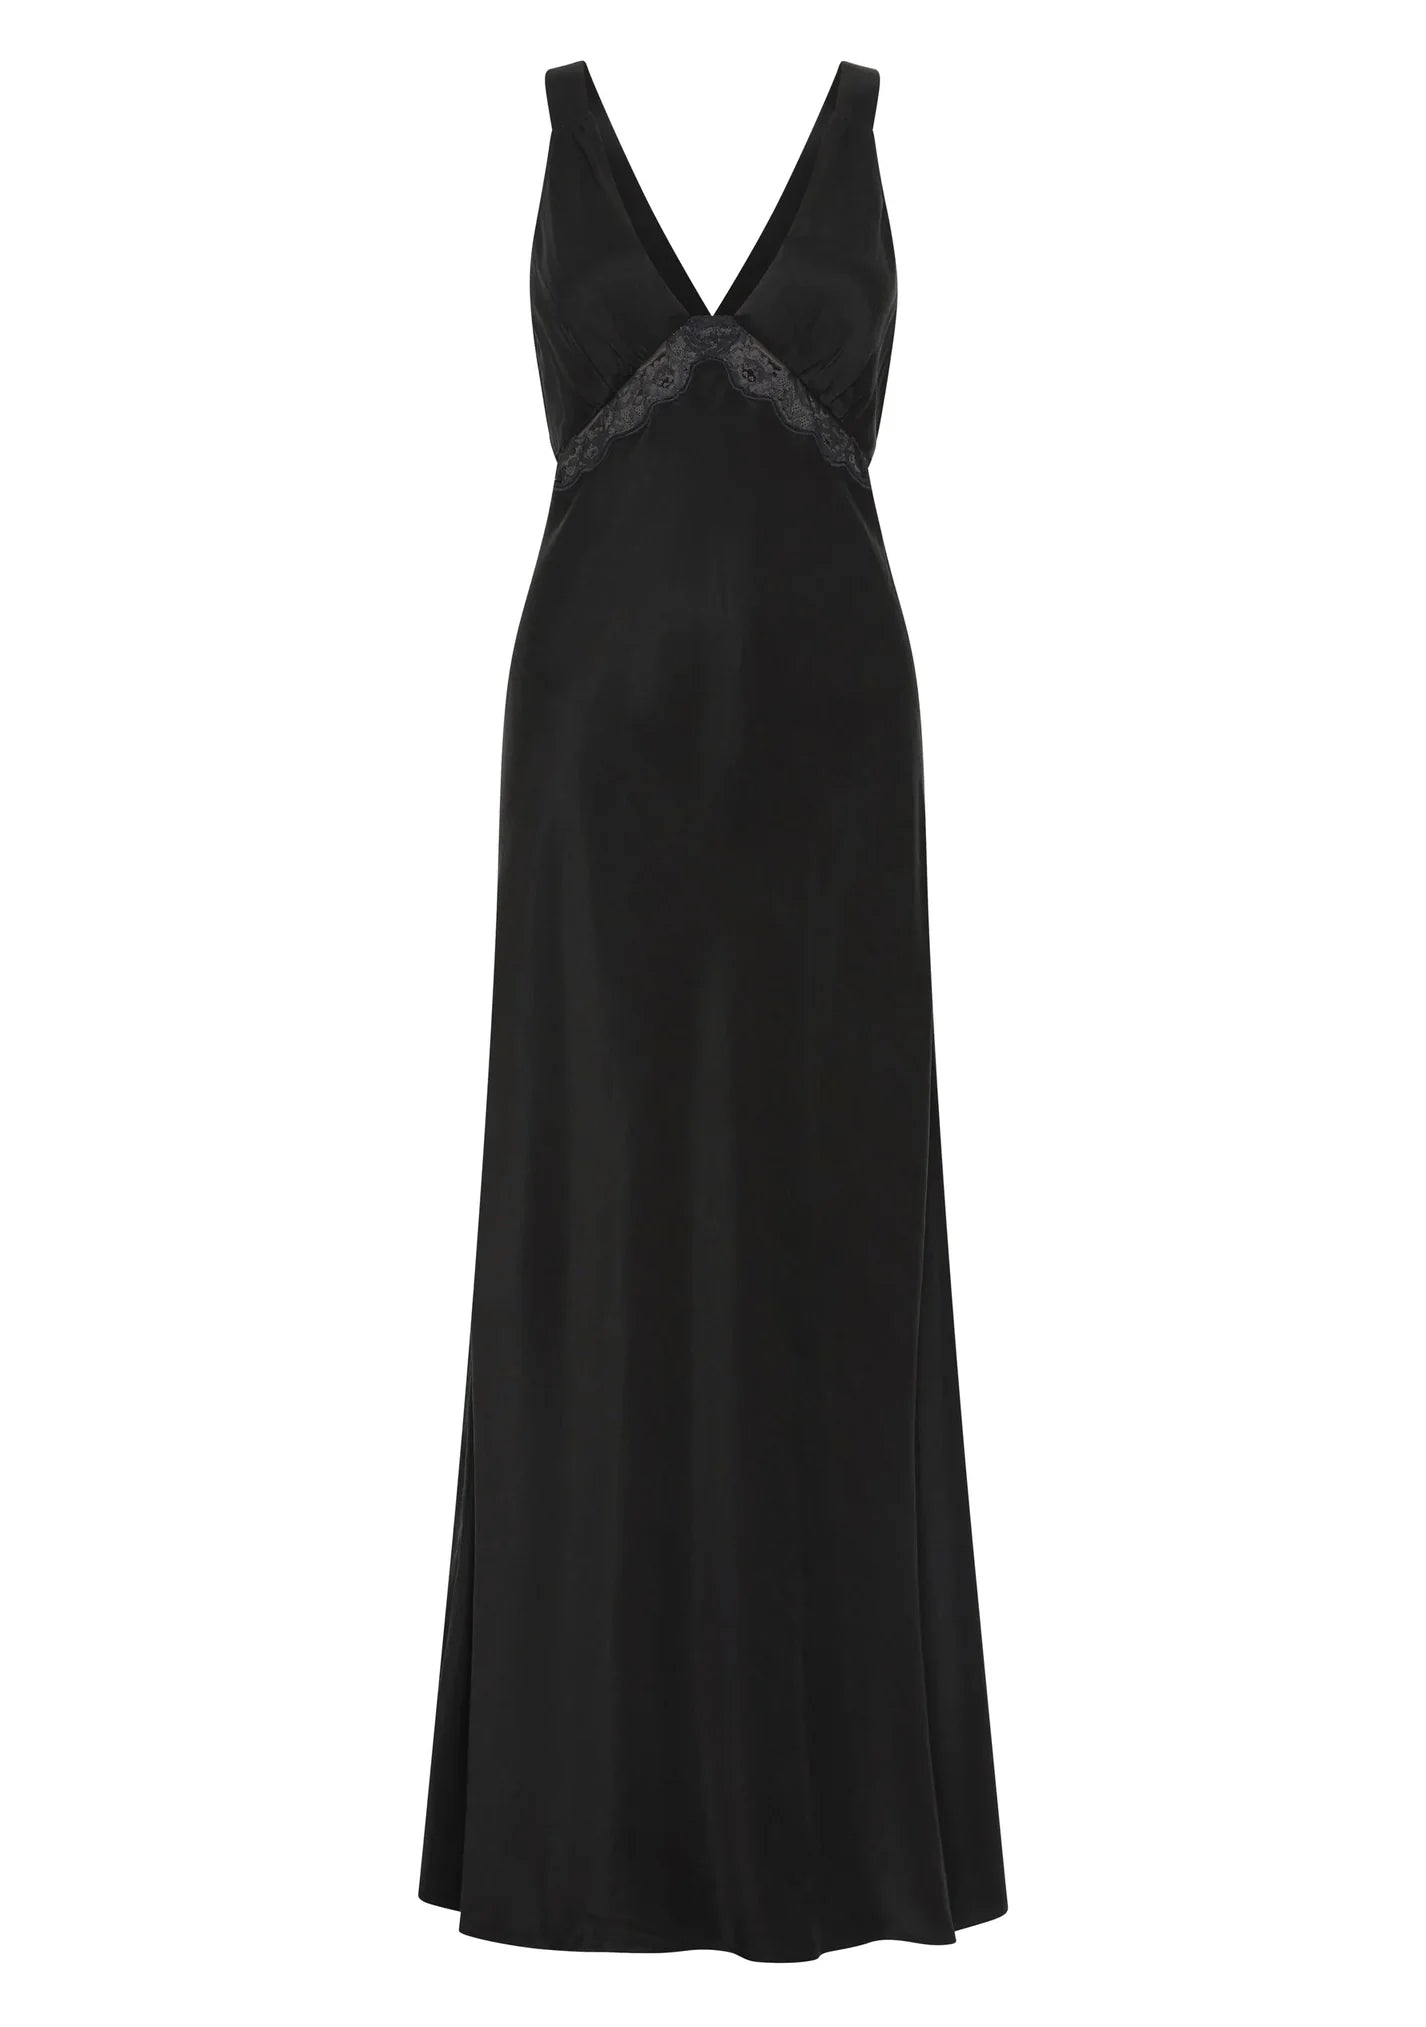 Auguste Aurelia Maxi Dress - Black - Pinkhill, Darwin boutique, Australian high end fashion, Darwin Fashion